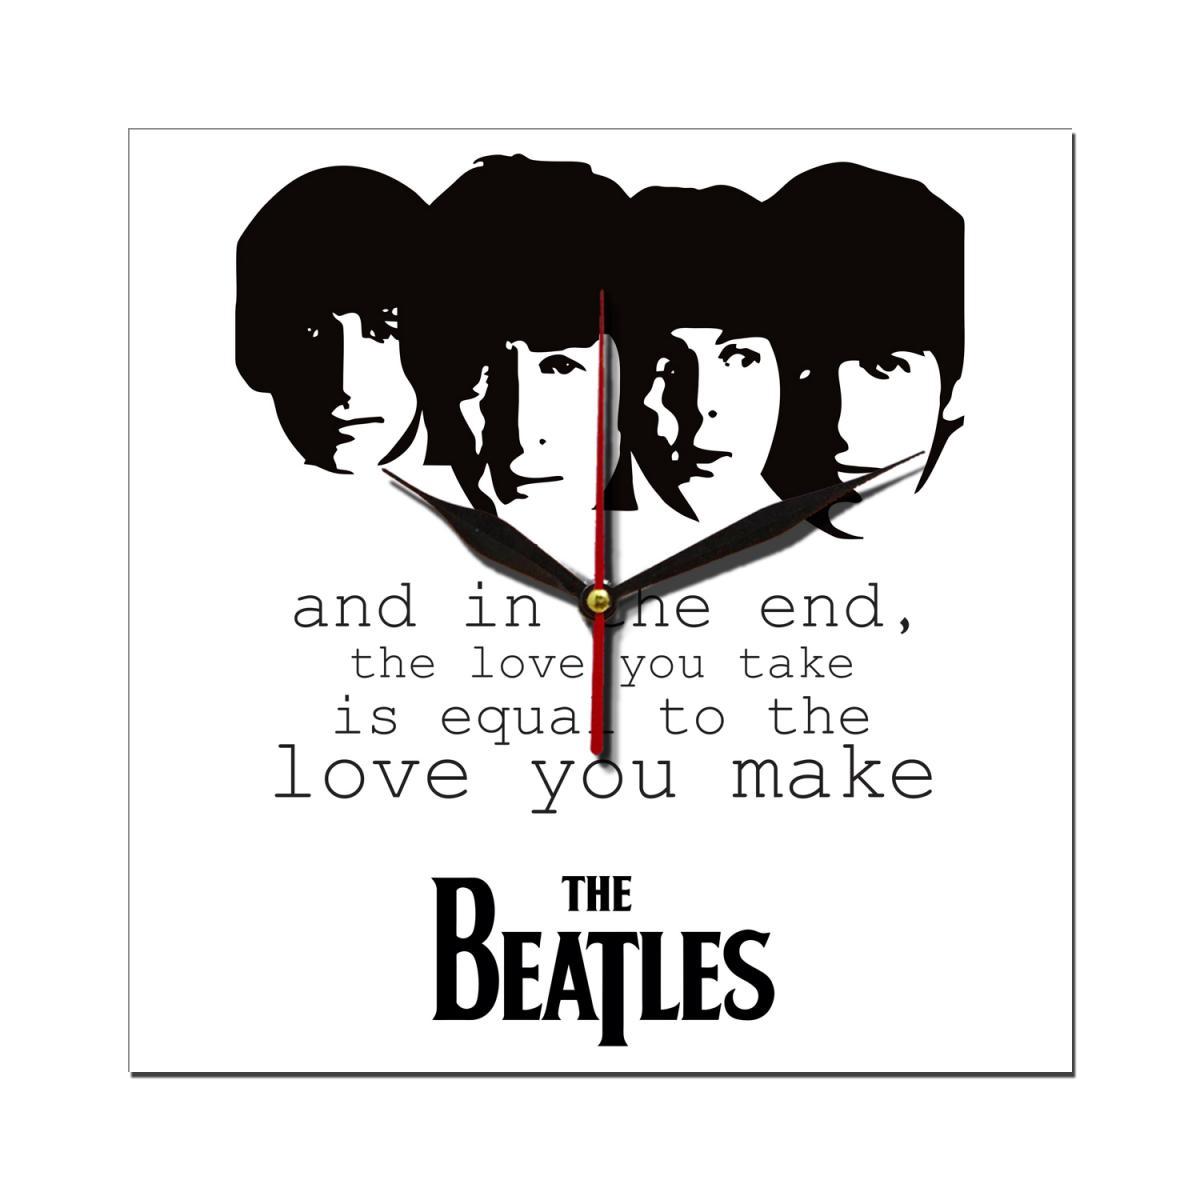 Jam Dinding Unik - Beatles